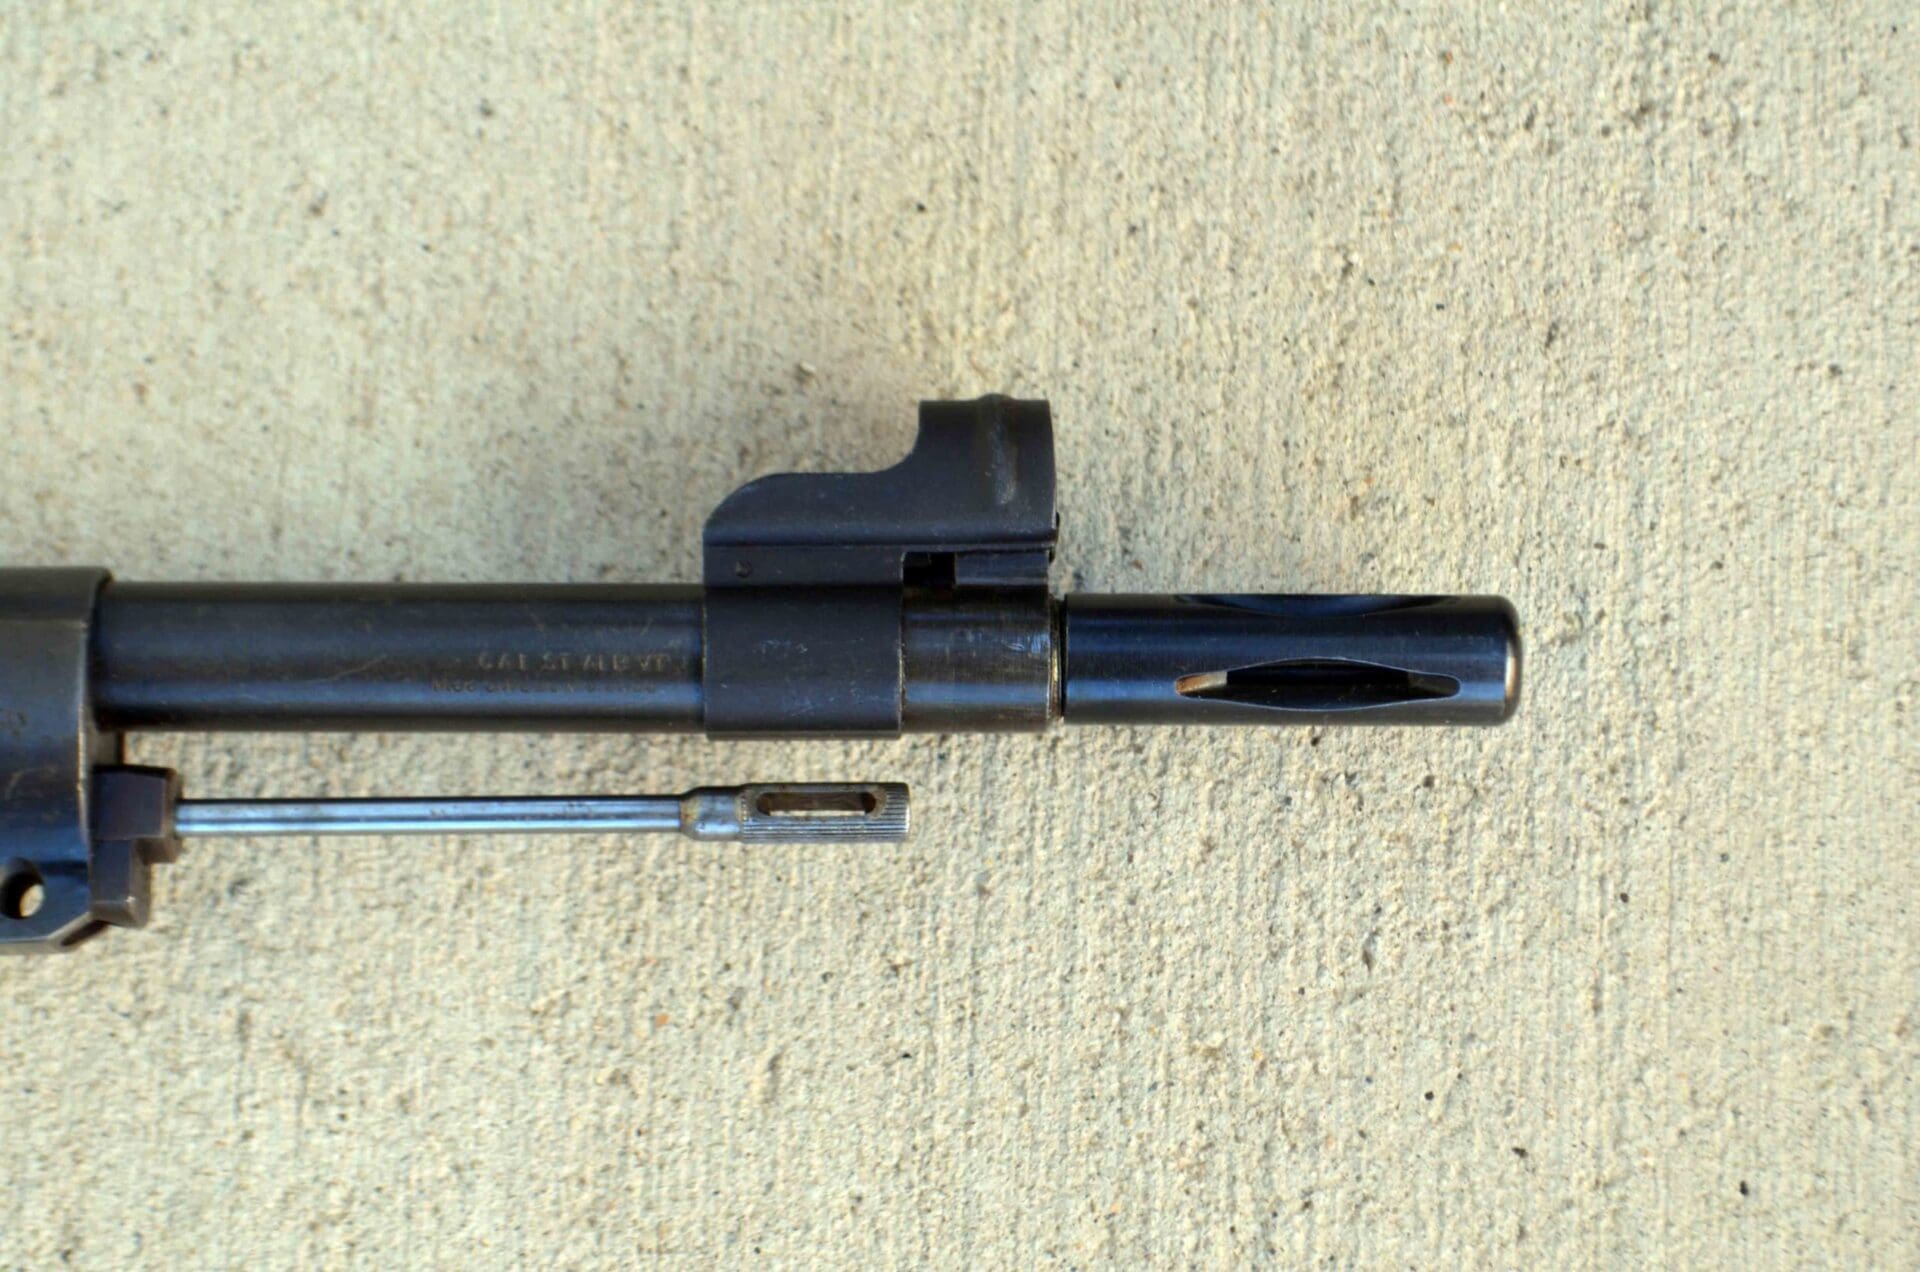 Swedish Mauser m38 with a muzzle brake